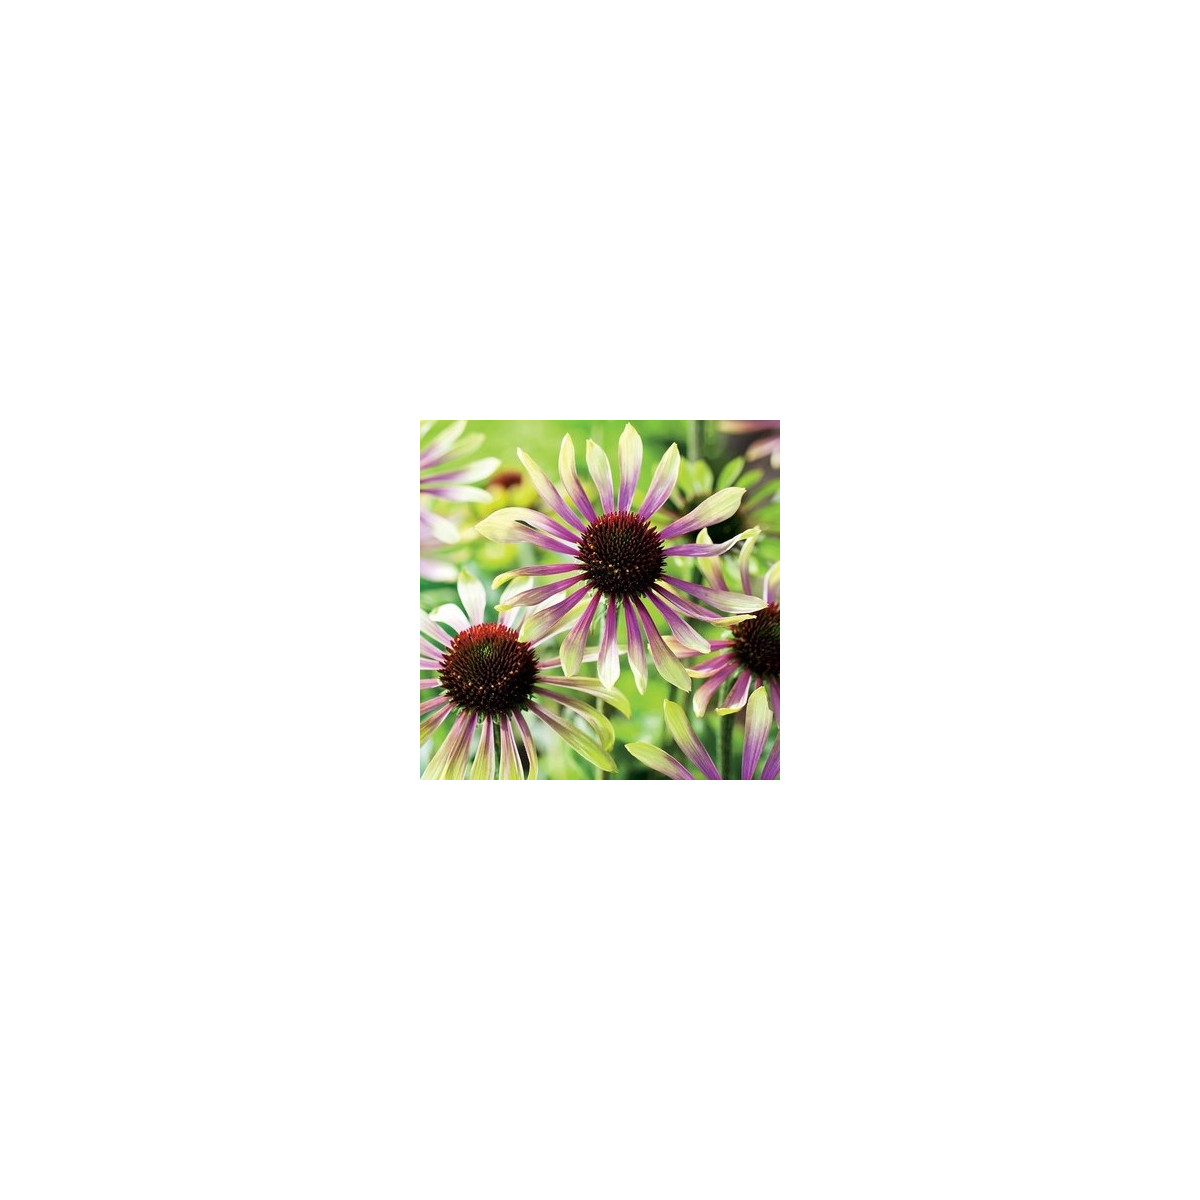 Třapatkovka Green Twister - Echinacea purpurea - prostokořenné sazenice třapatkovky - 1 ks